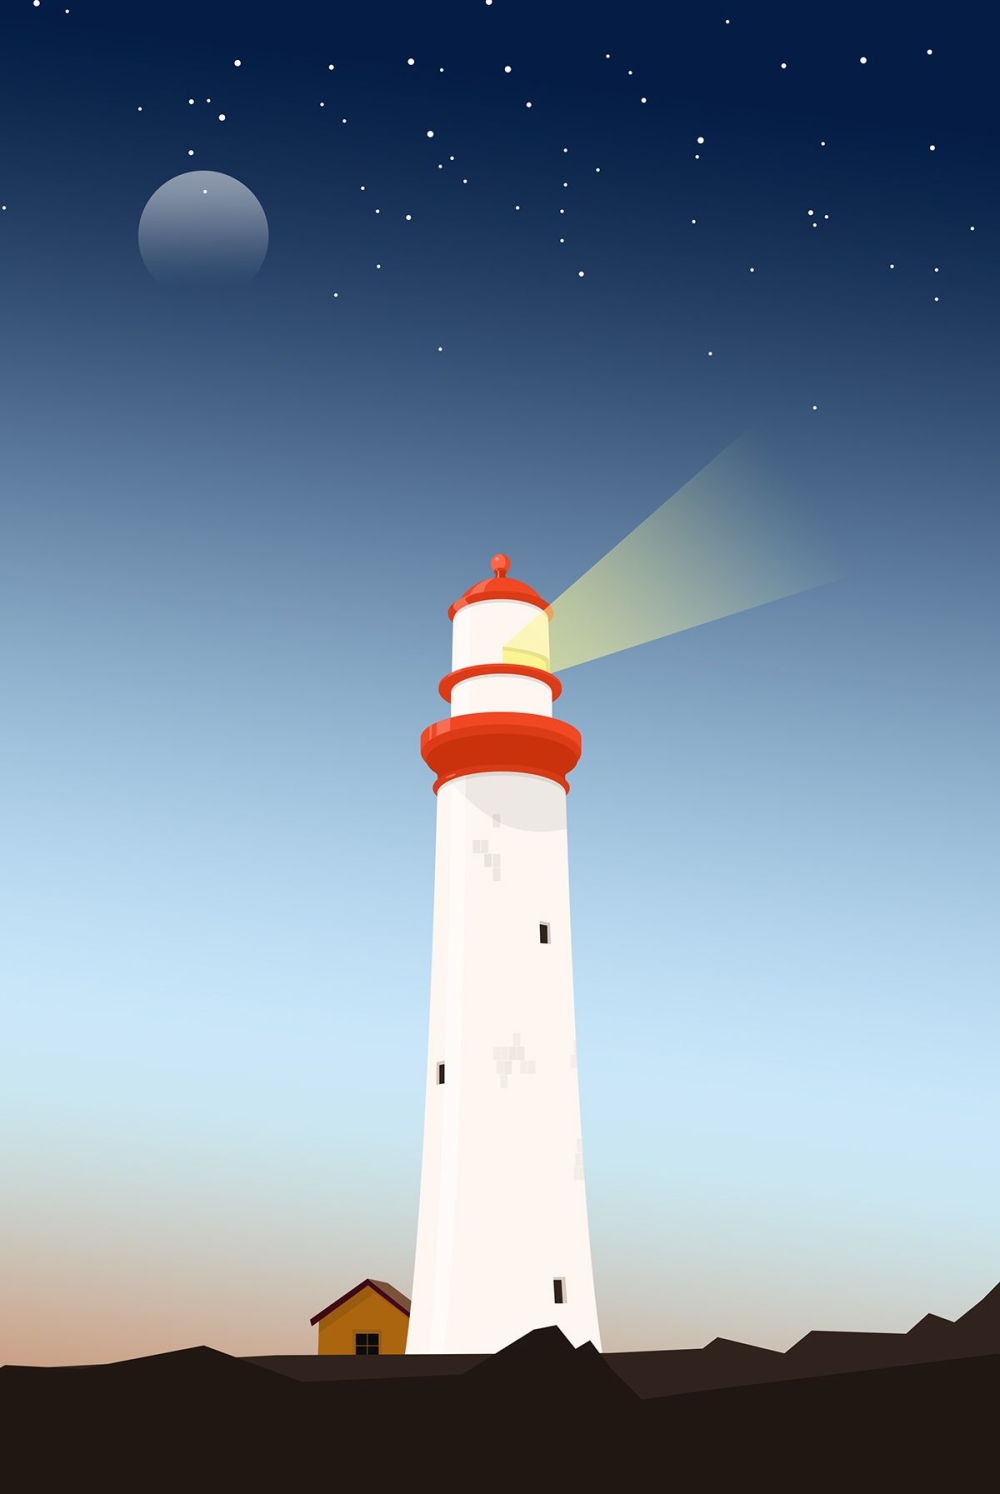 7 Lighthouse illustrations